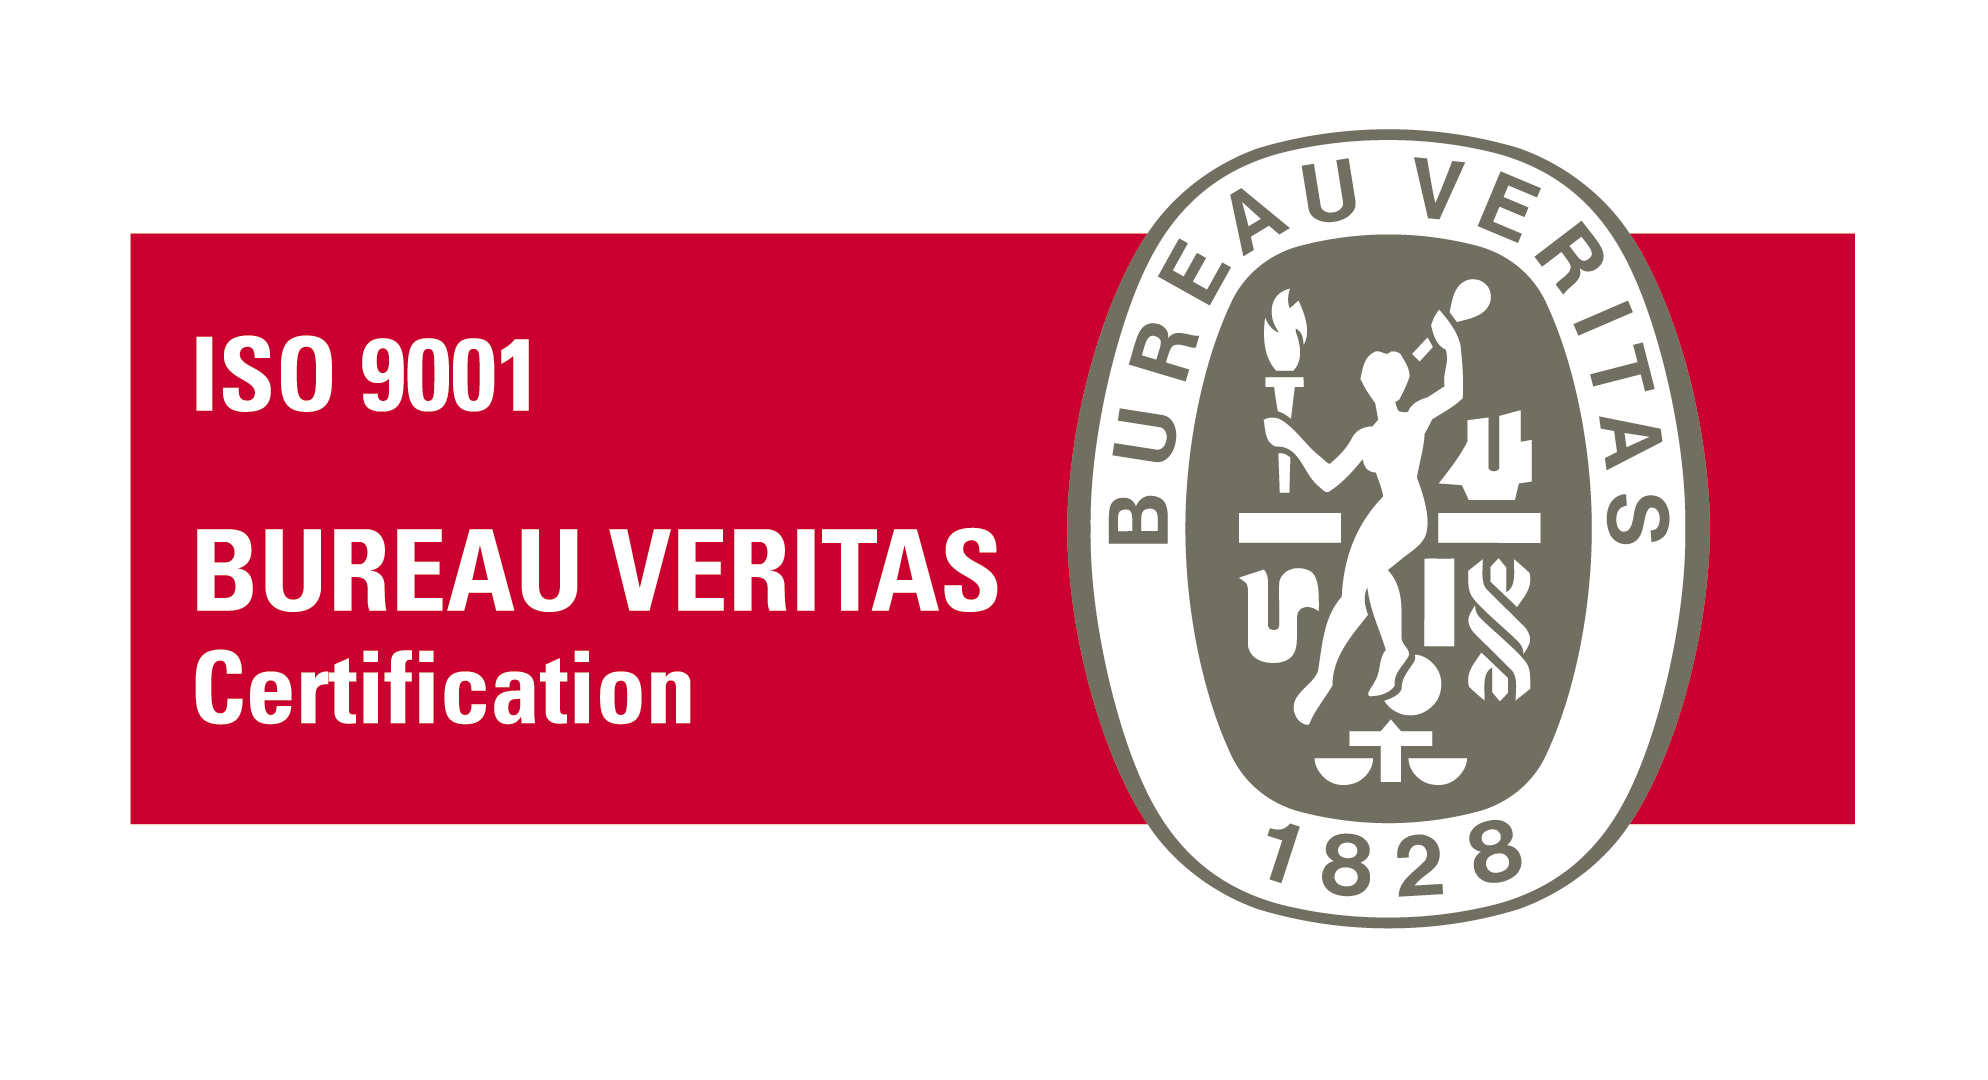 Bureau Veritas Certification Logo photo - 1